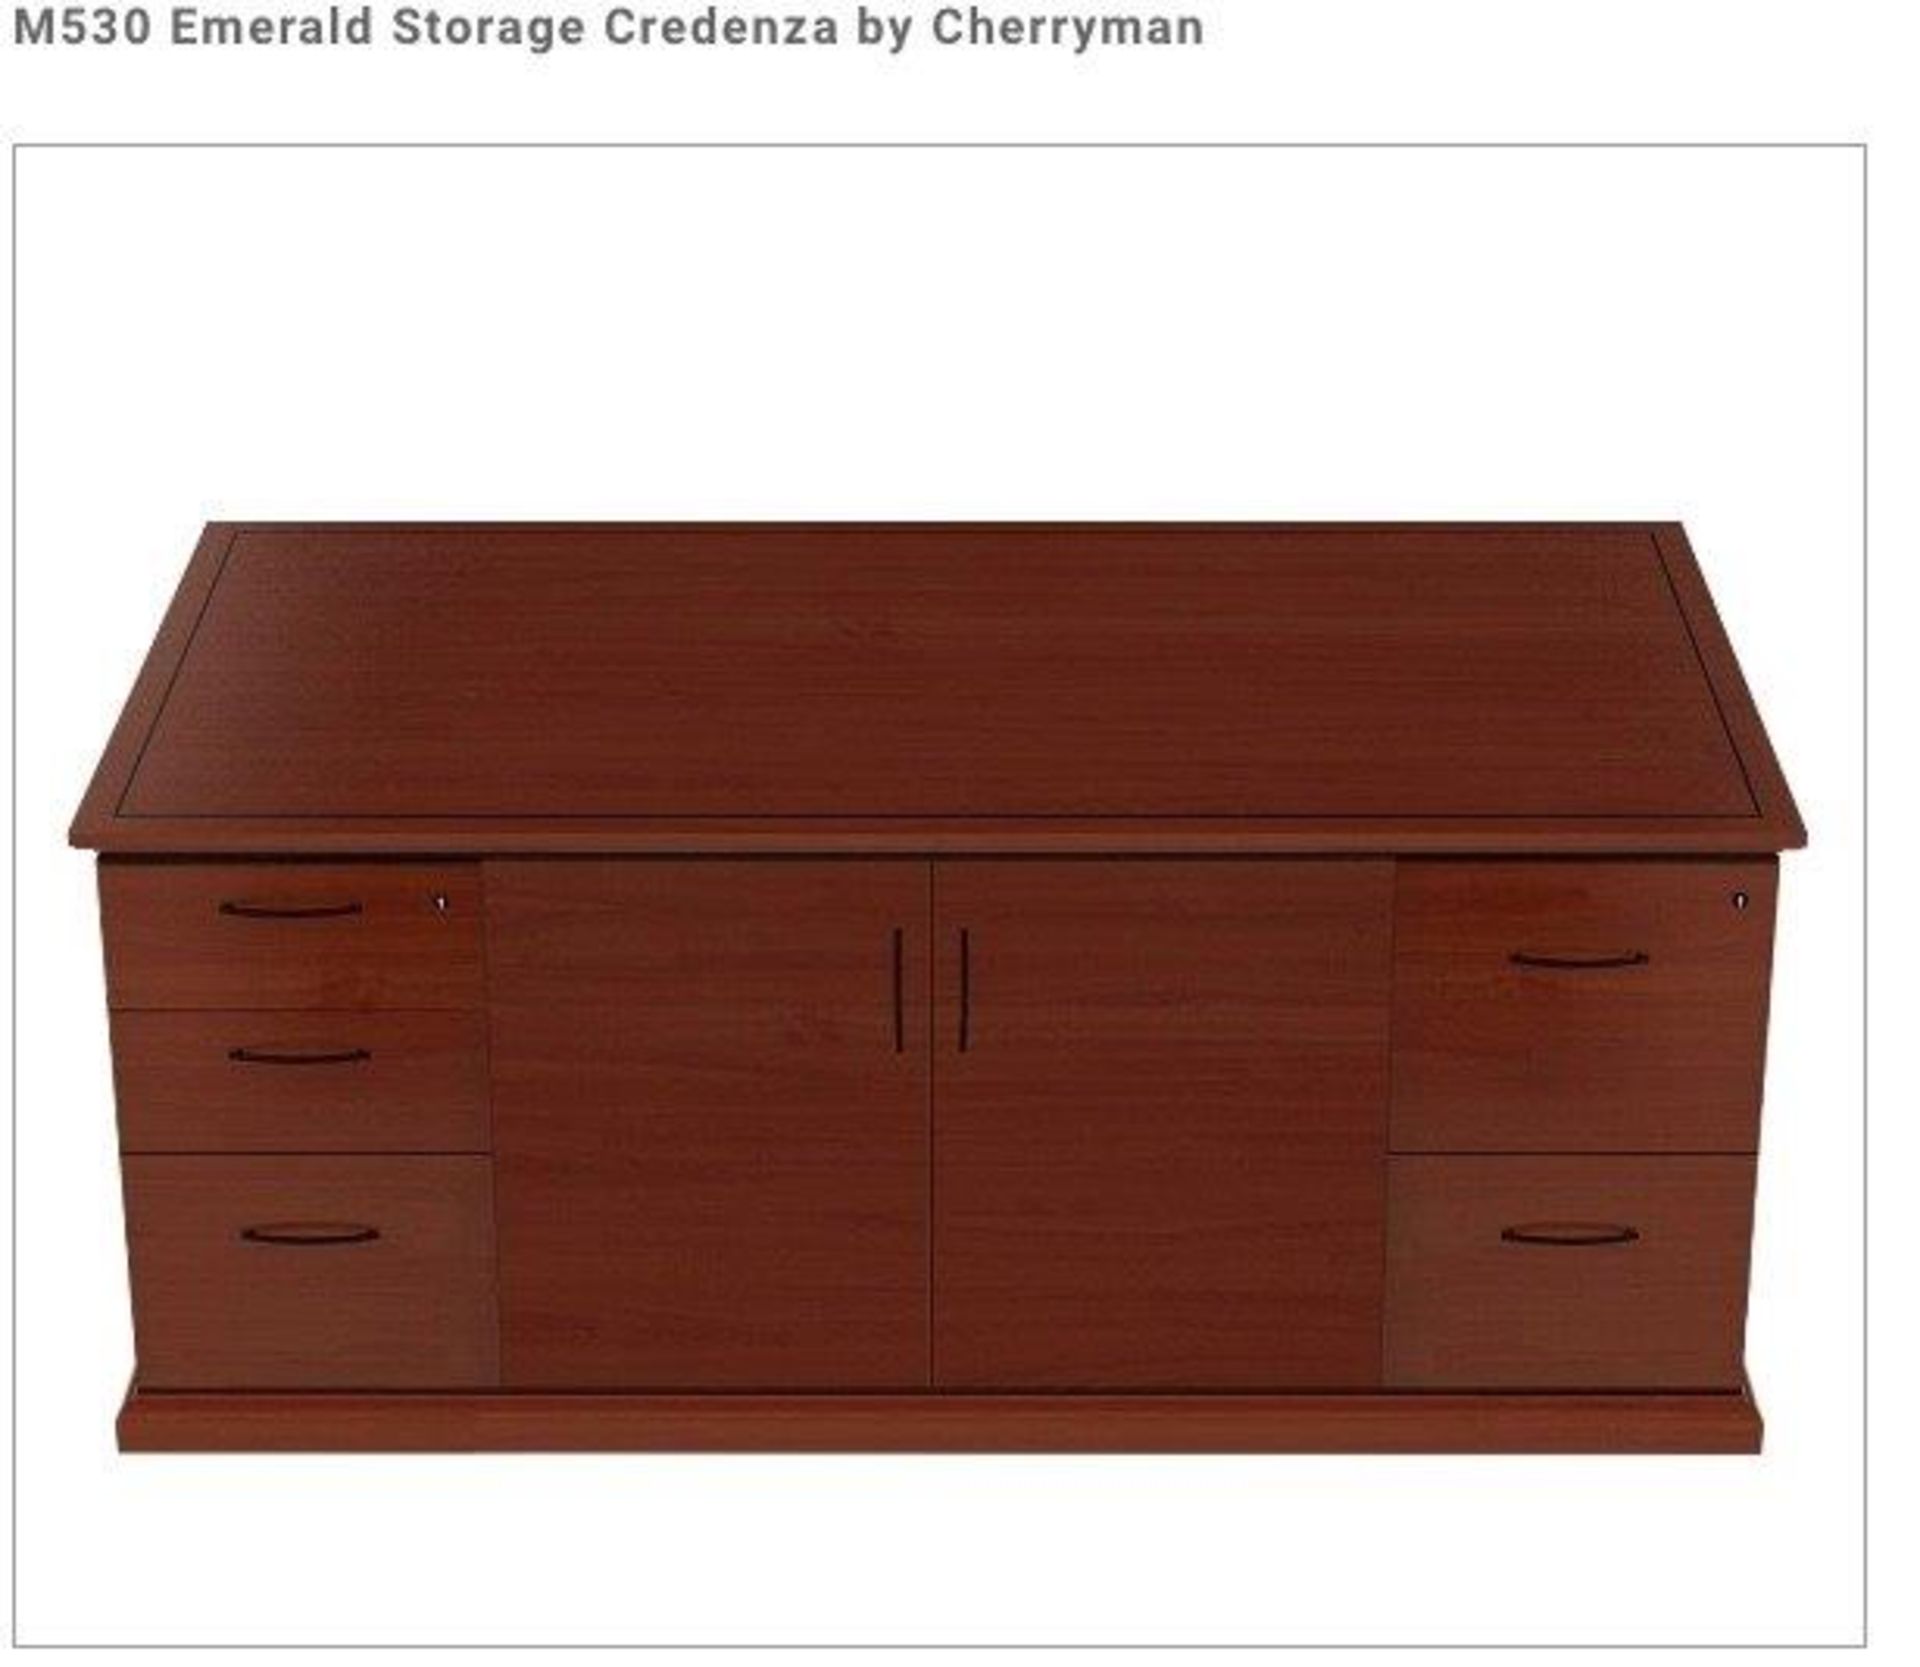 (2) Cherryman Emerald Collection Maple Credenza Assembled (M530) (List price each: $3500)